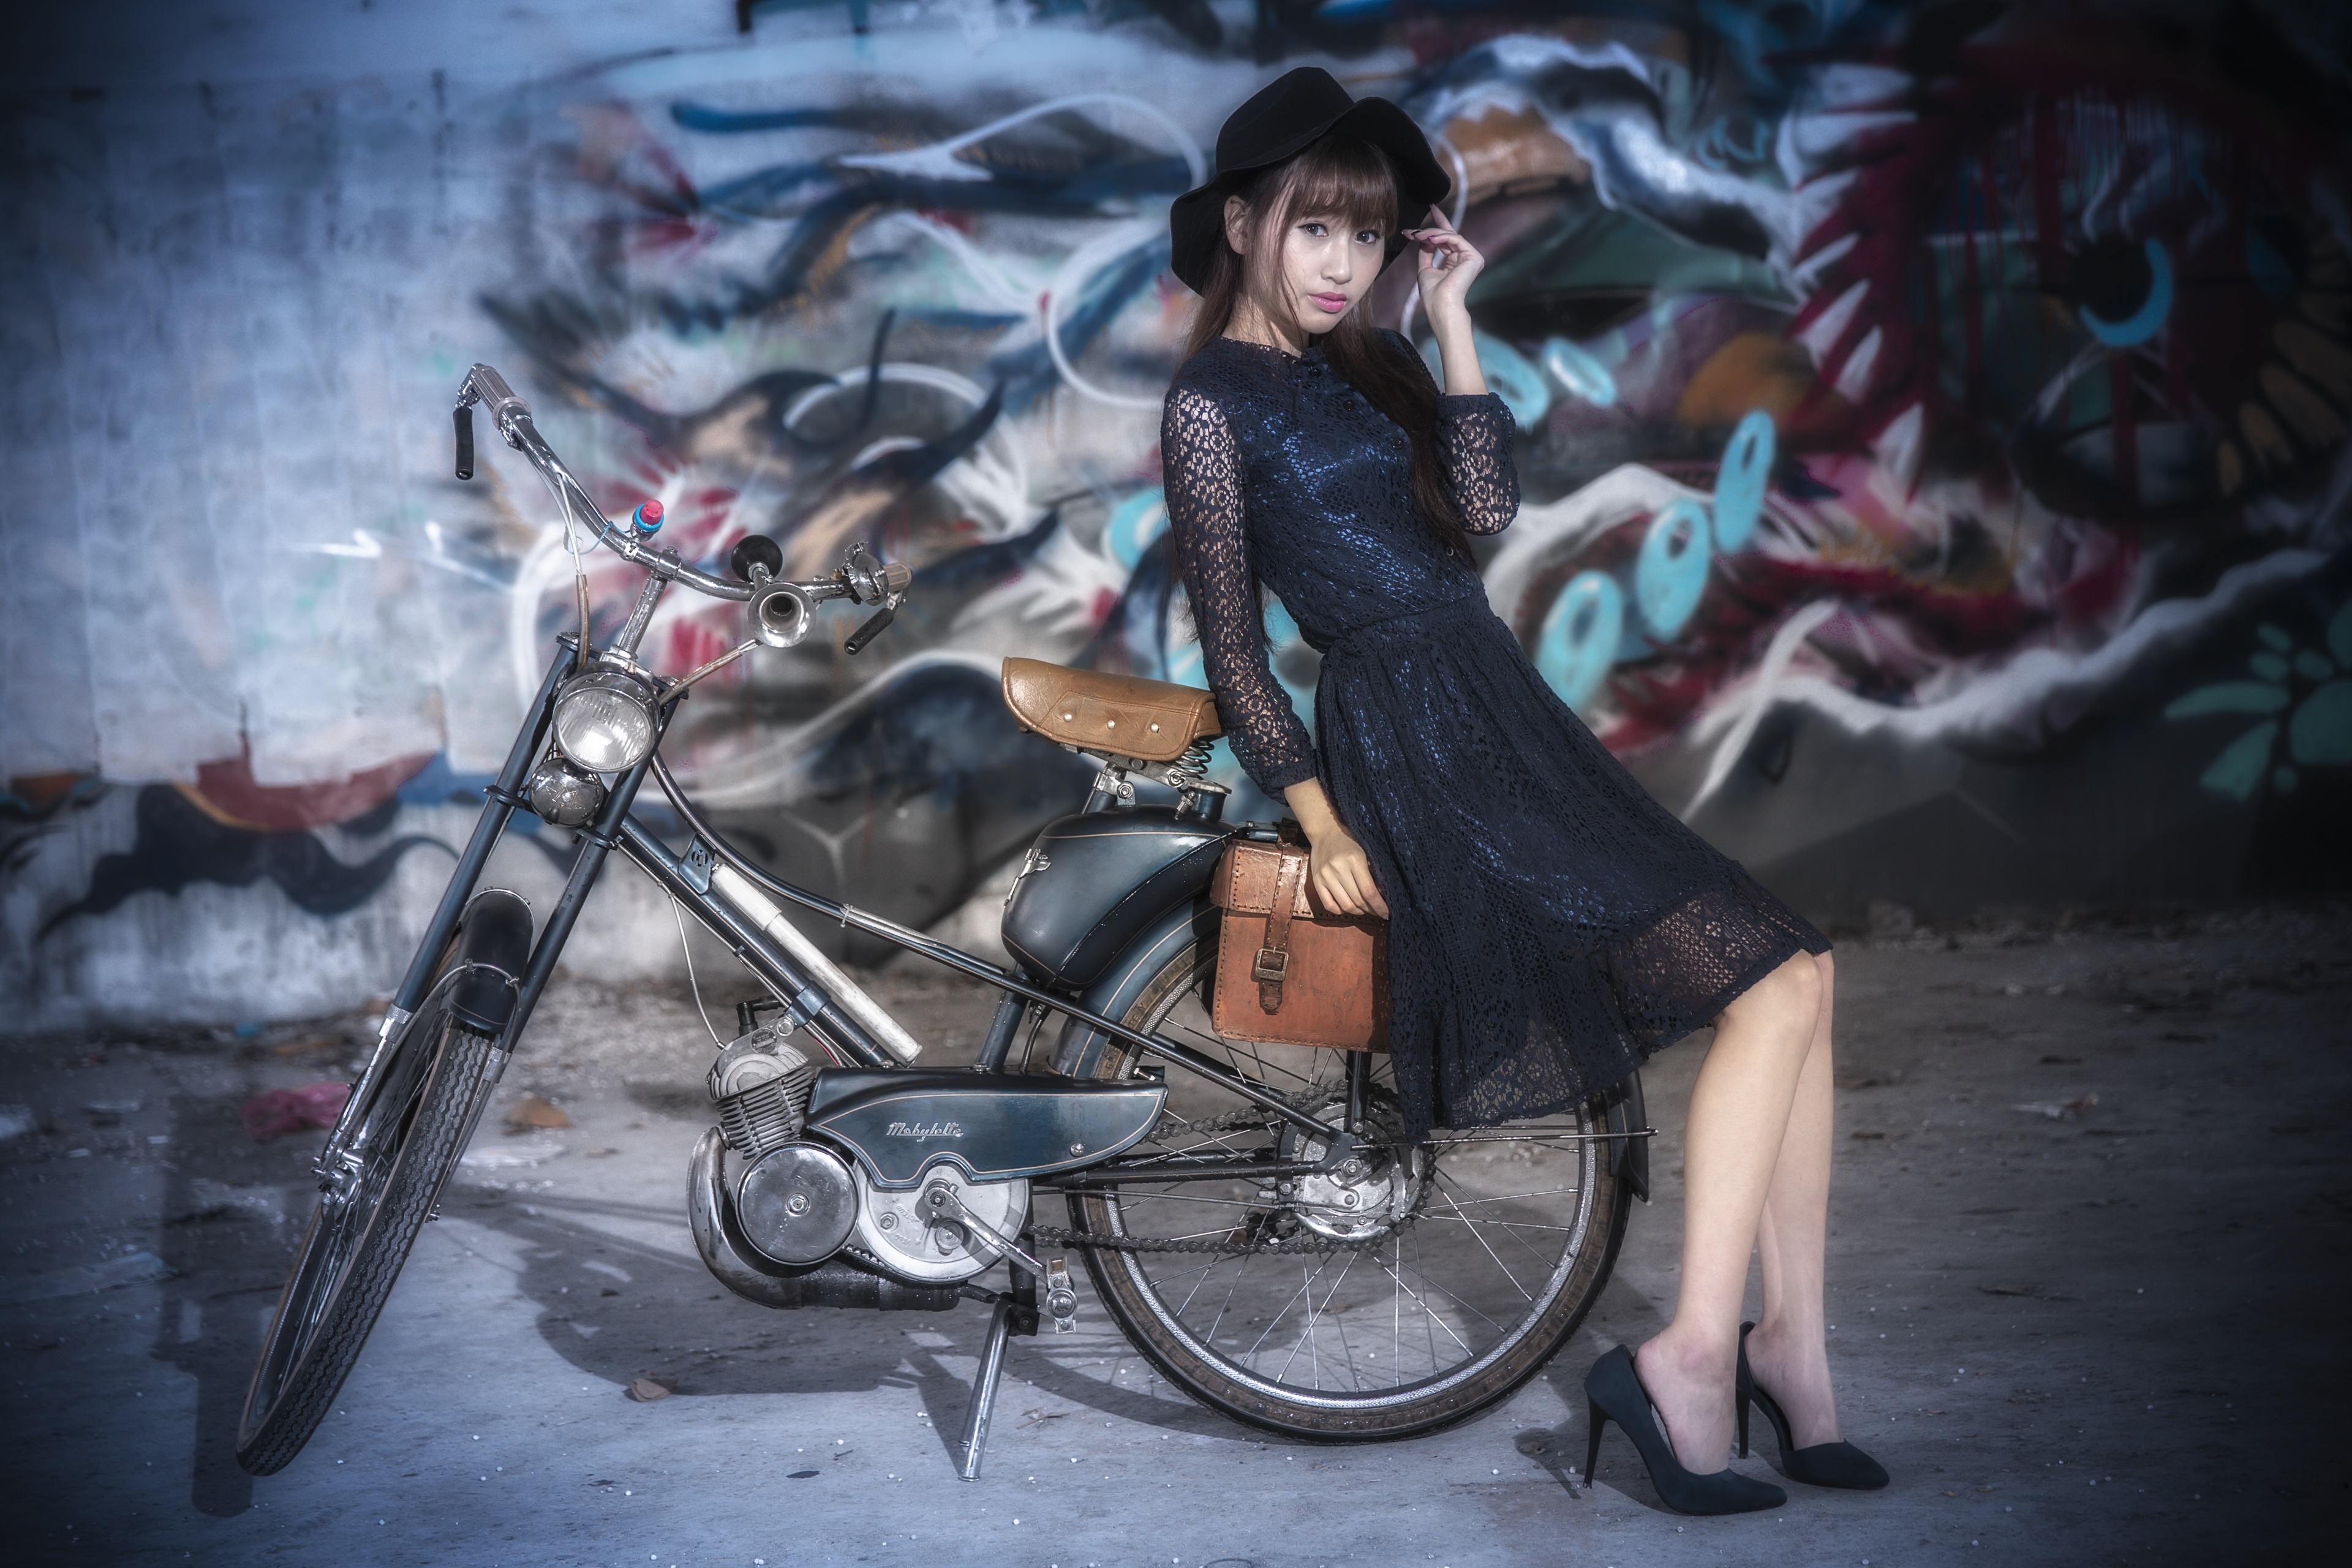 Asian Model Women Long Hair Brunette Bicycle Black Dress Black Heels Graffiti Wall Hat 3840x2560